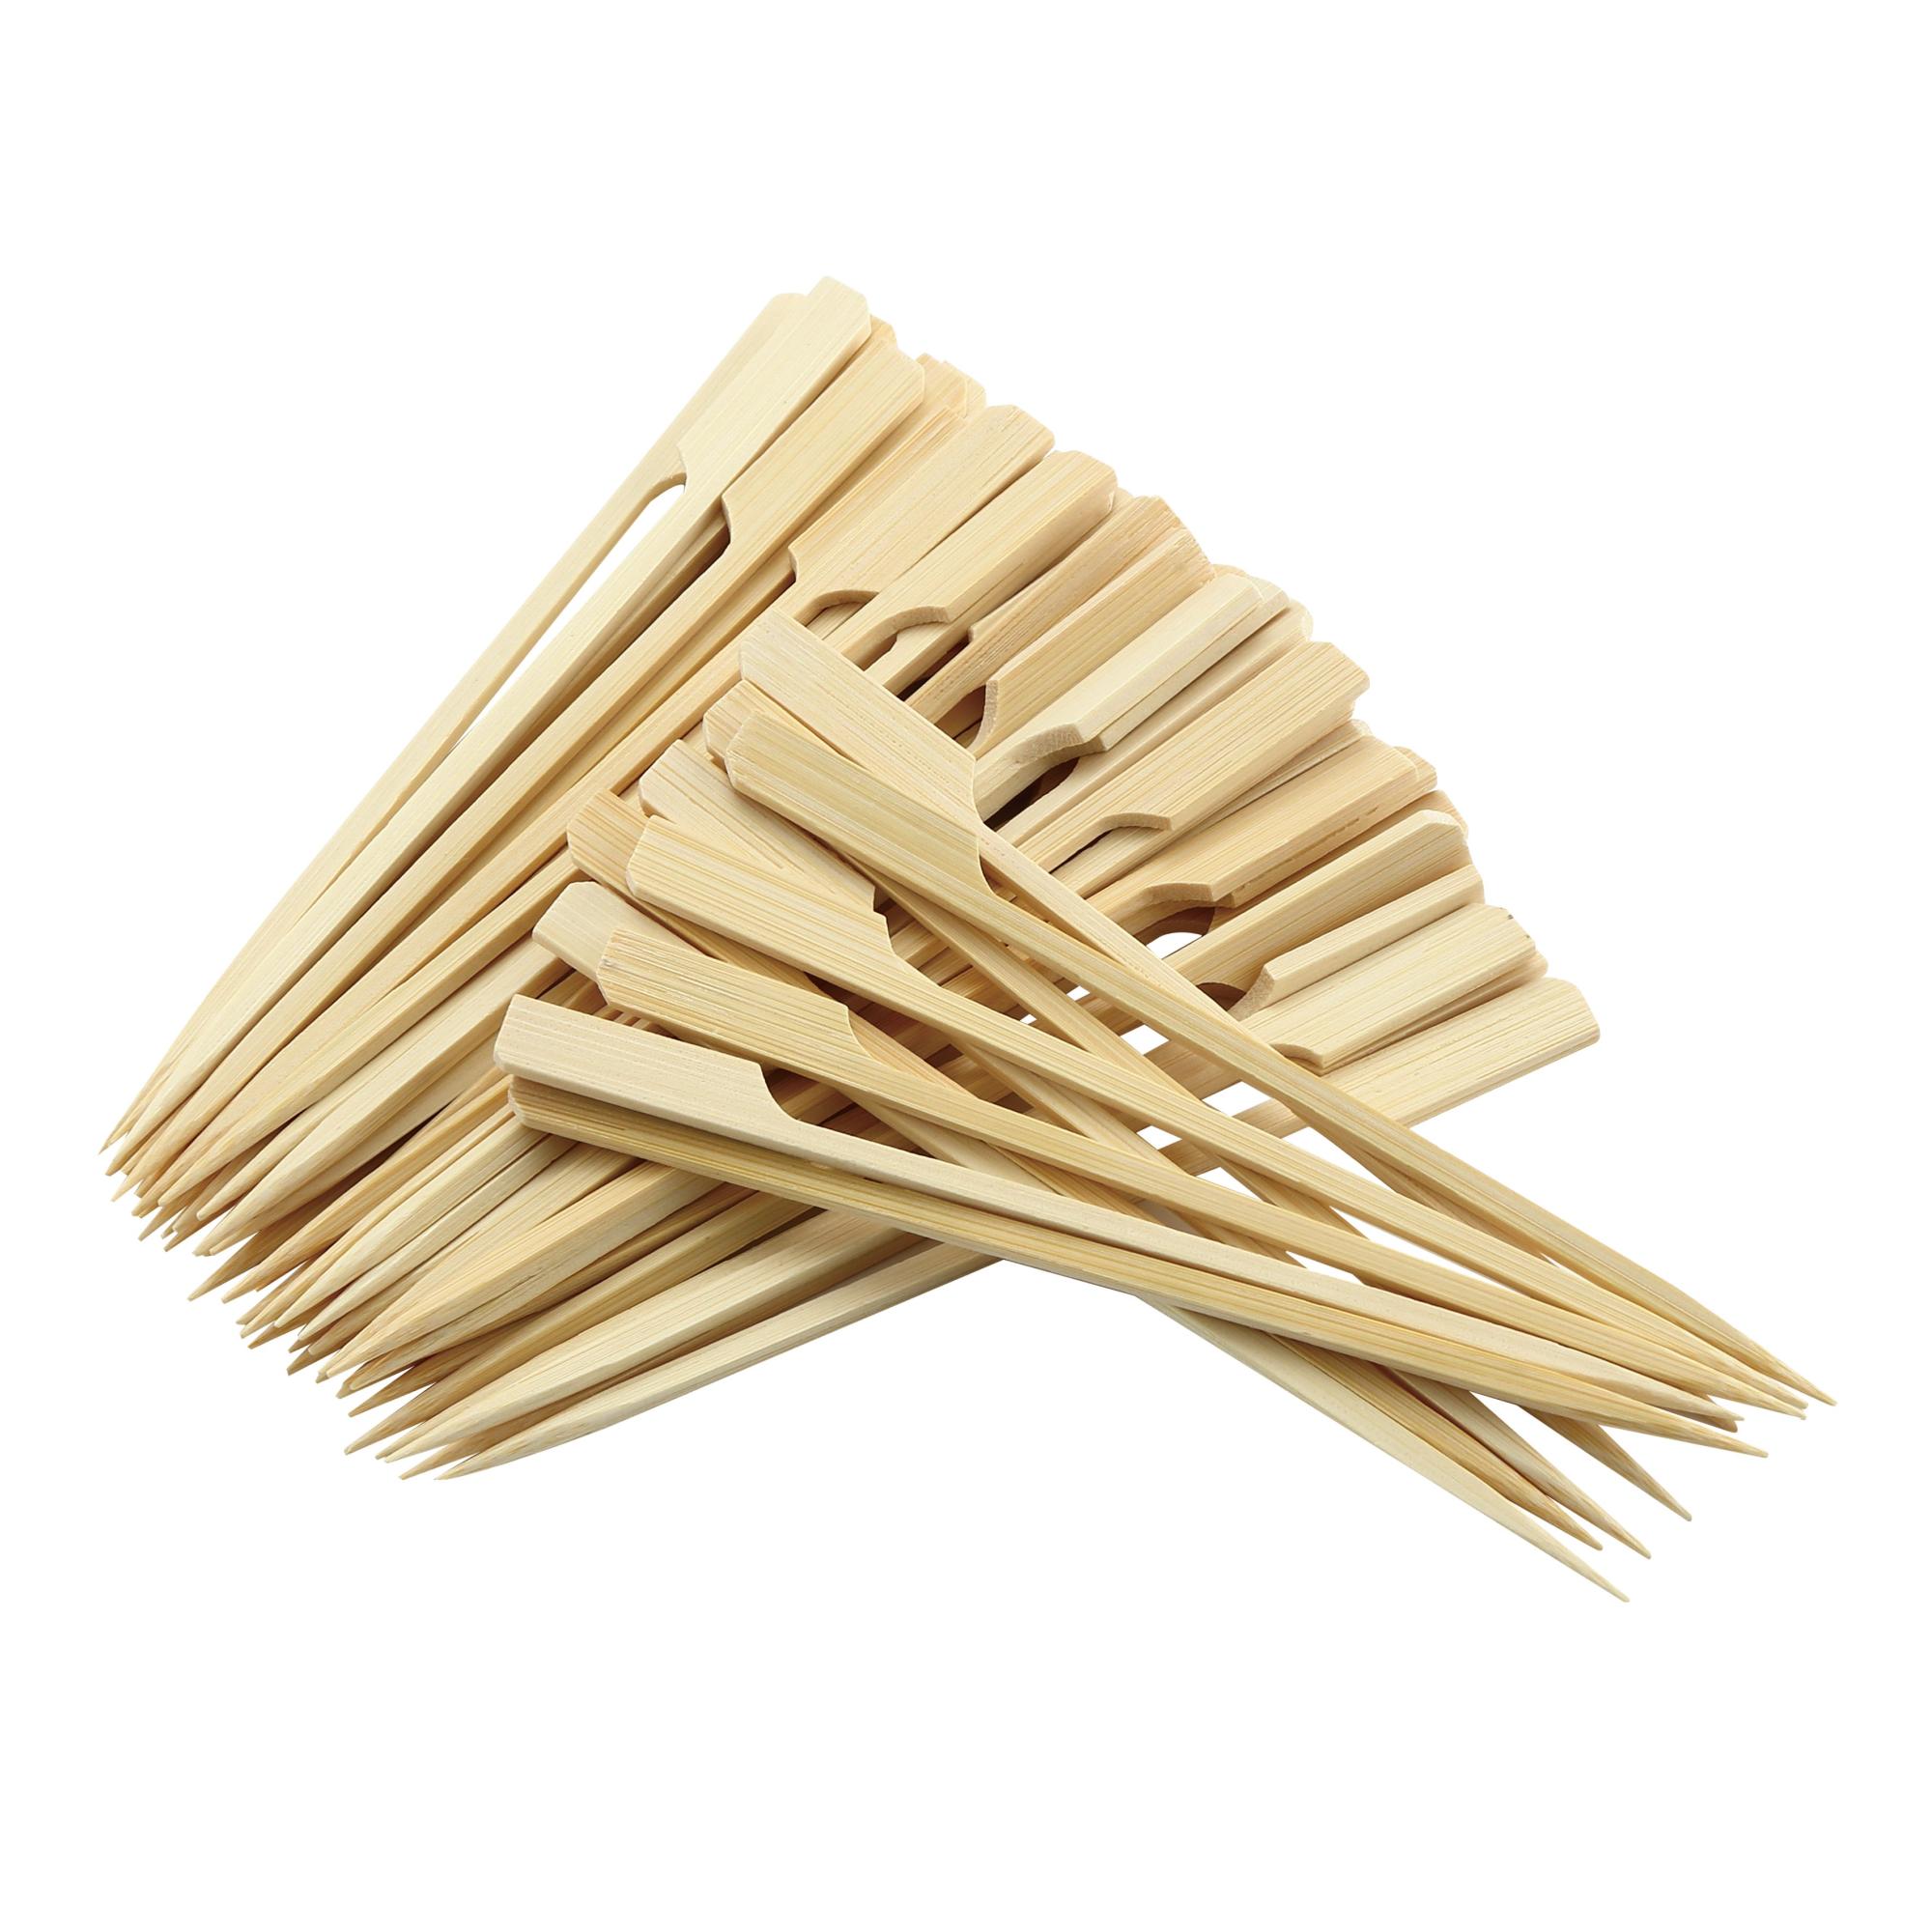 Pique brochette en bambou 150 mm - Fiesta - Boite de 100